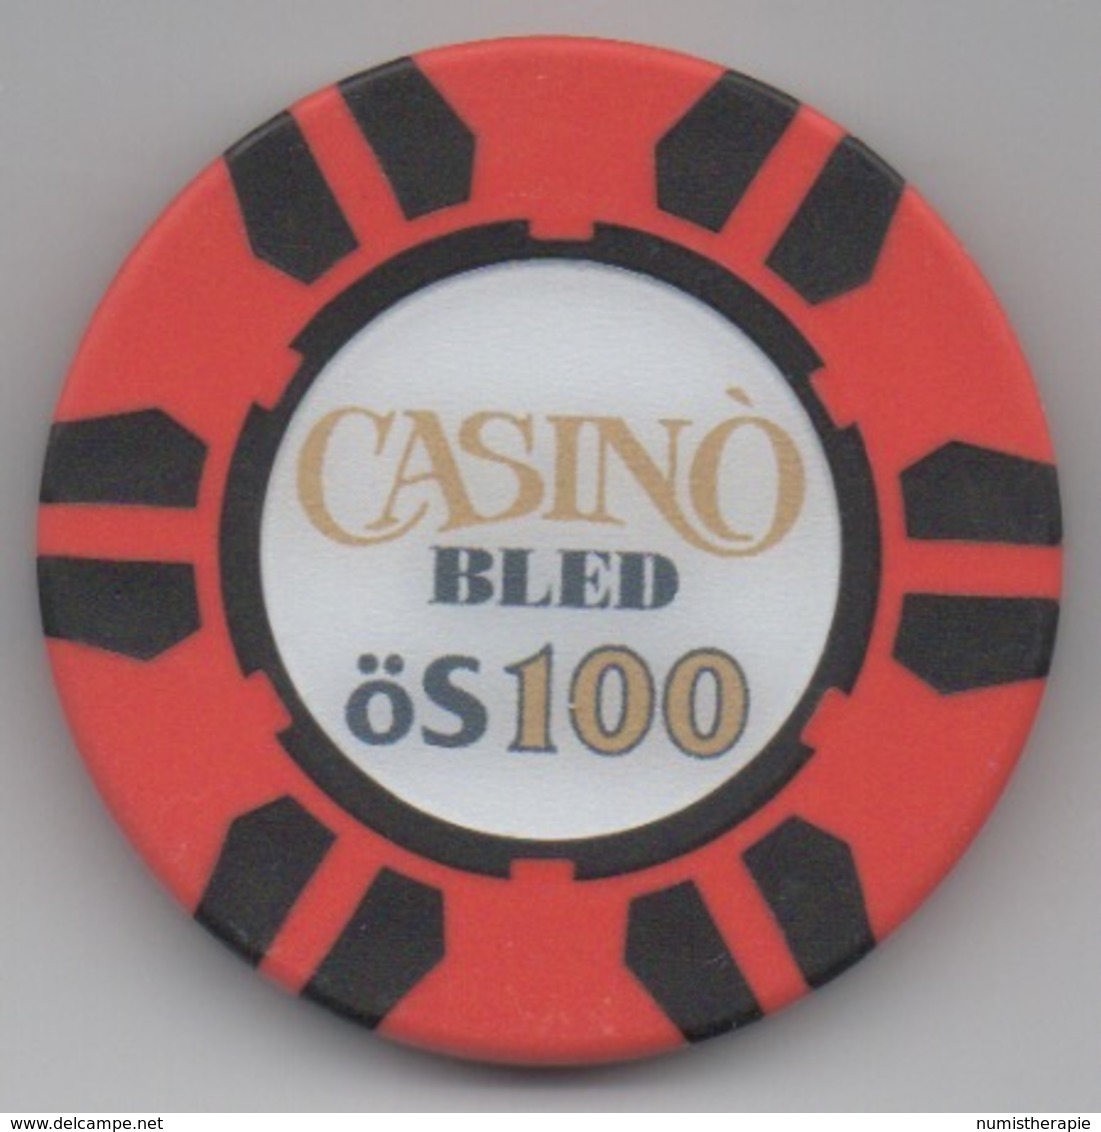 Jeton De Casinò Bled Slovénie öS 100 - Casino